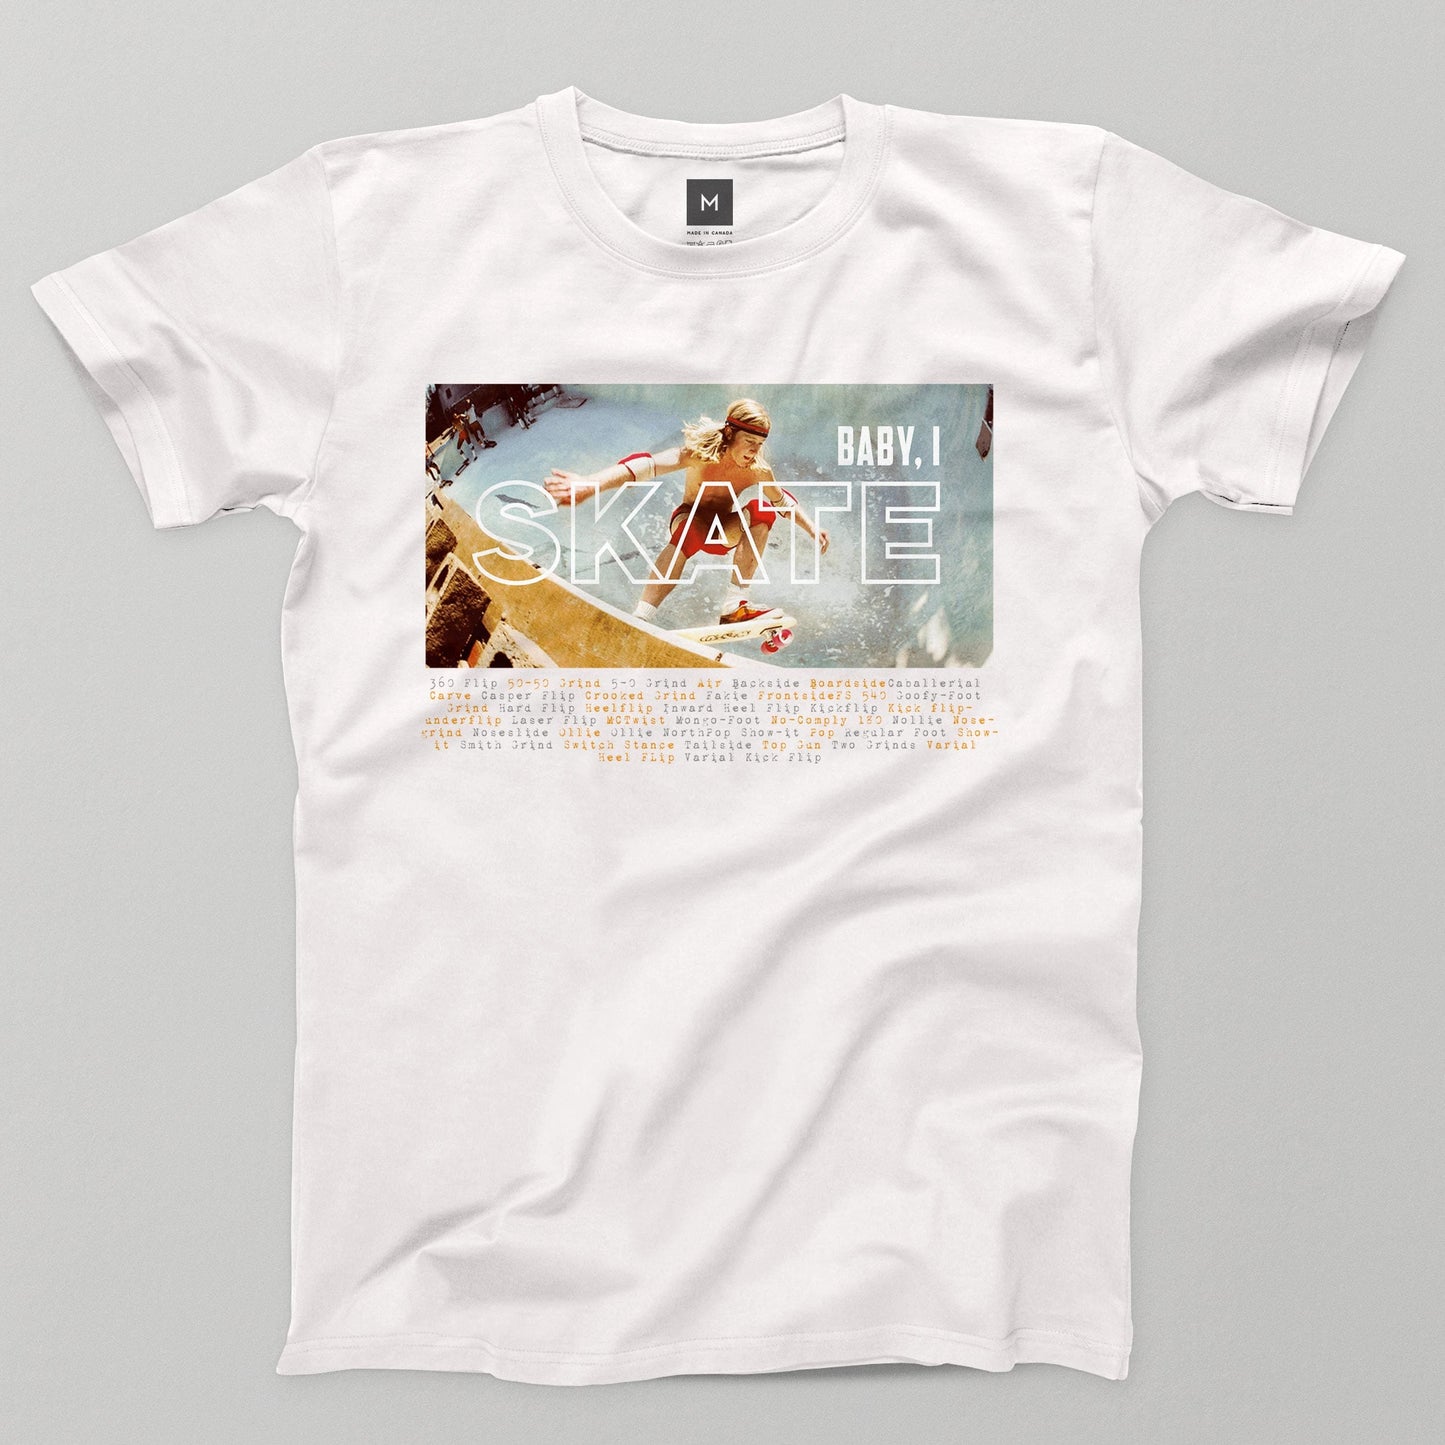 Baby, I Skate Men's/Unisex T-Shirt T-shirt by DIRT & GLORY